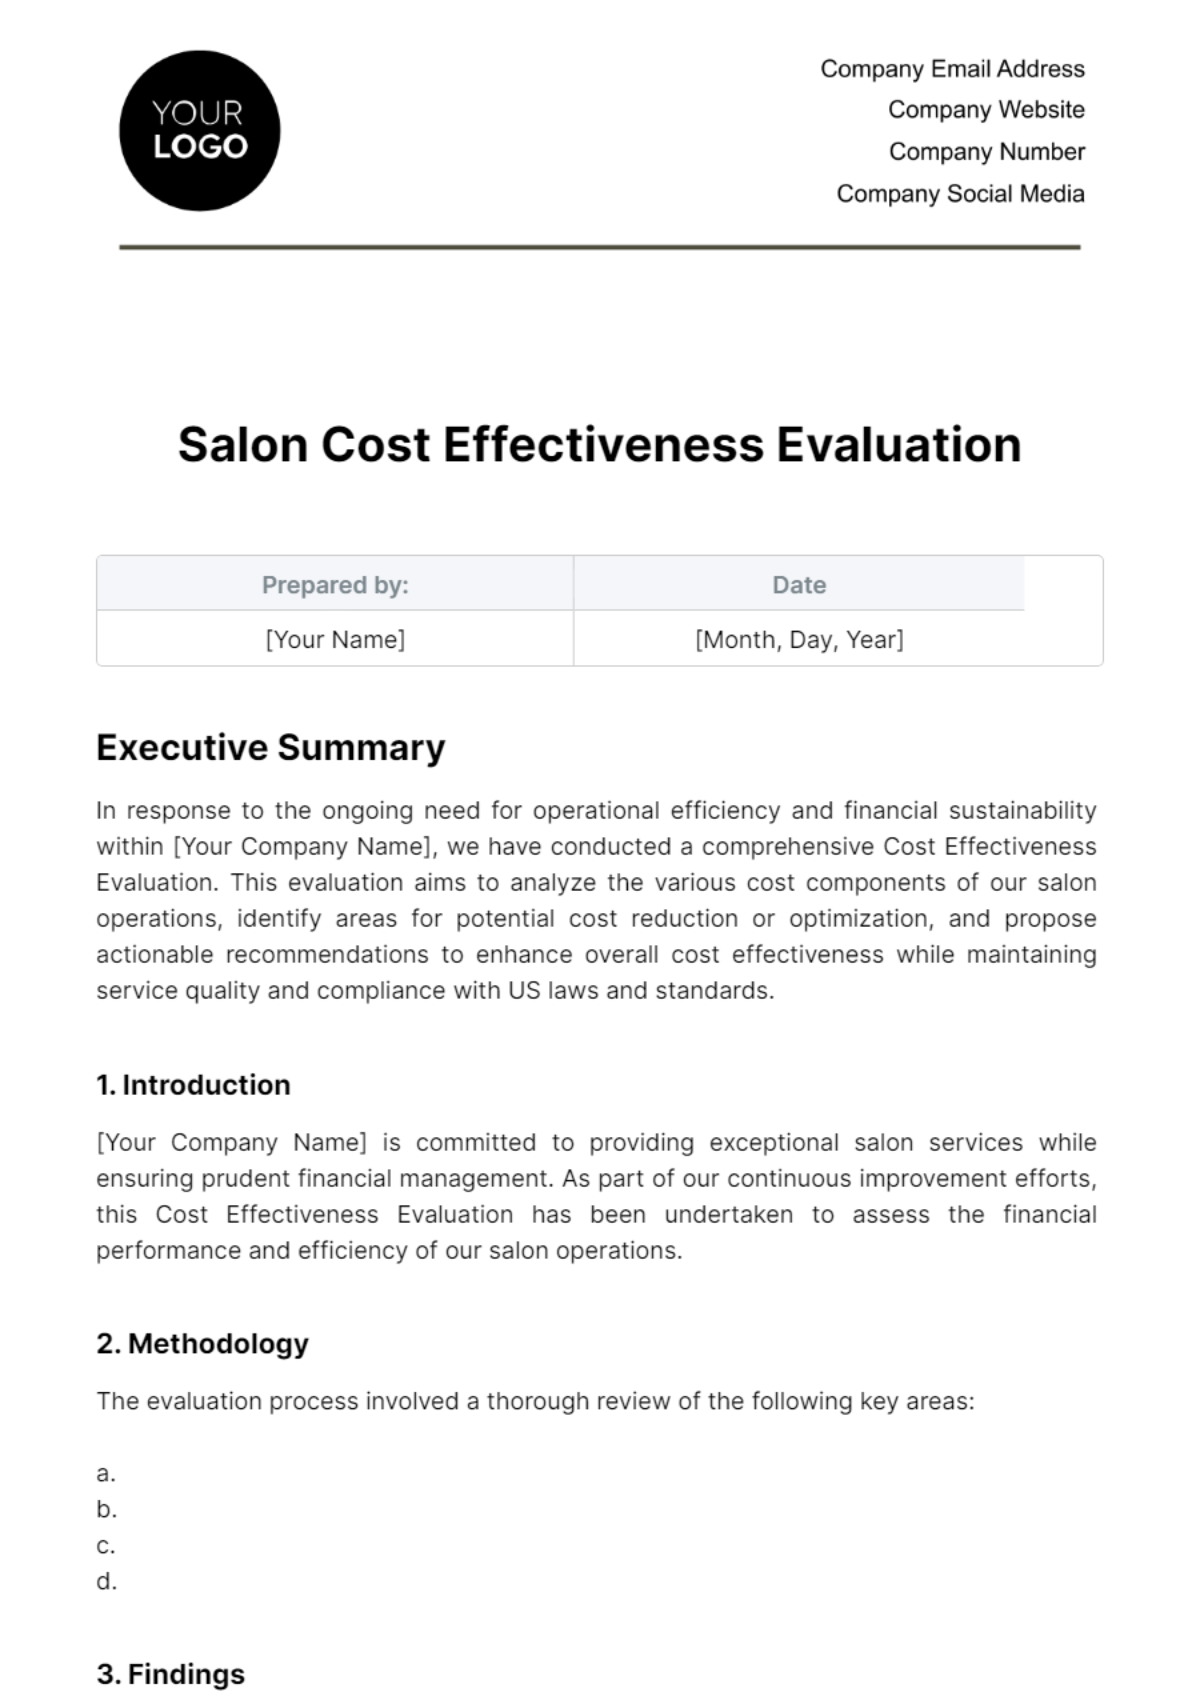 Free Salon Cost Effectiveness Evaluation Template